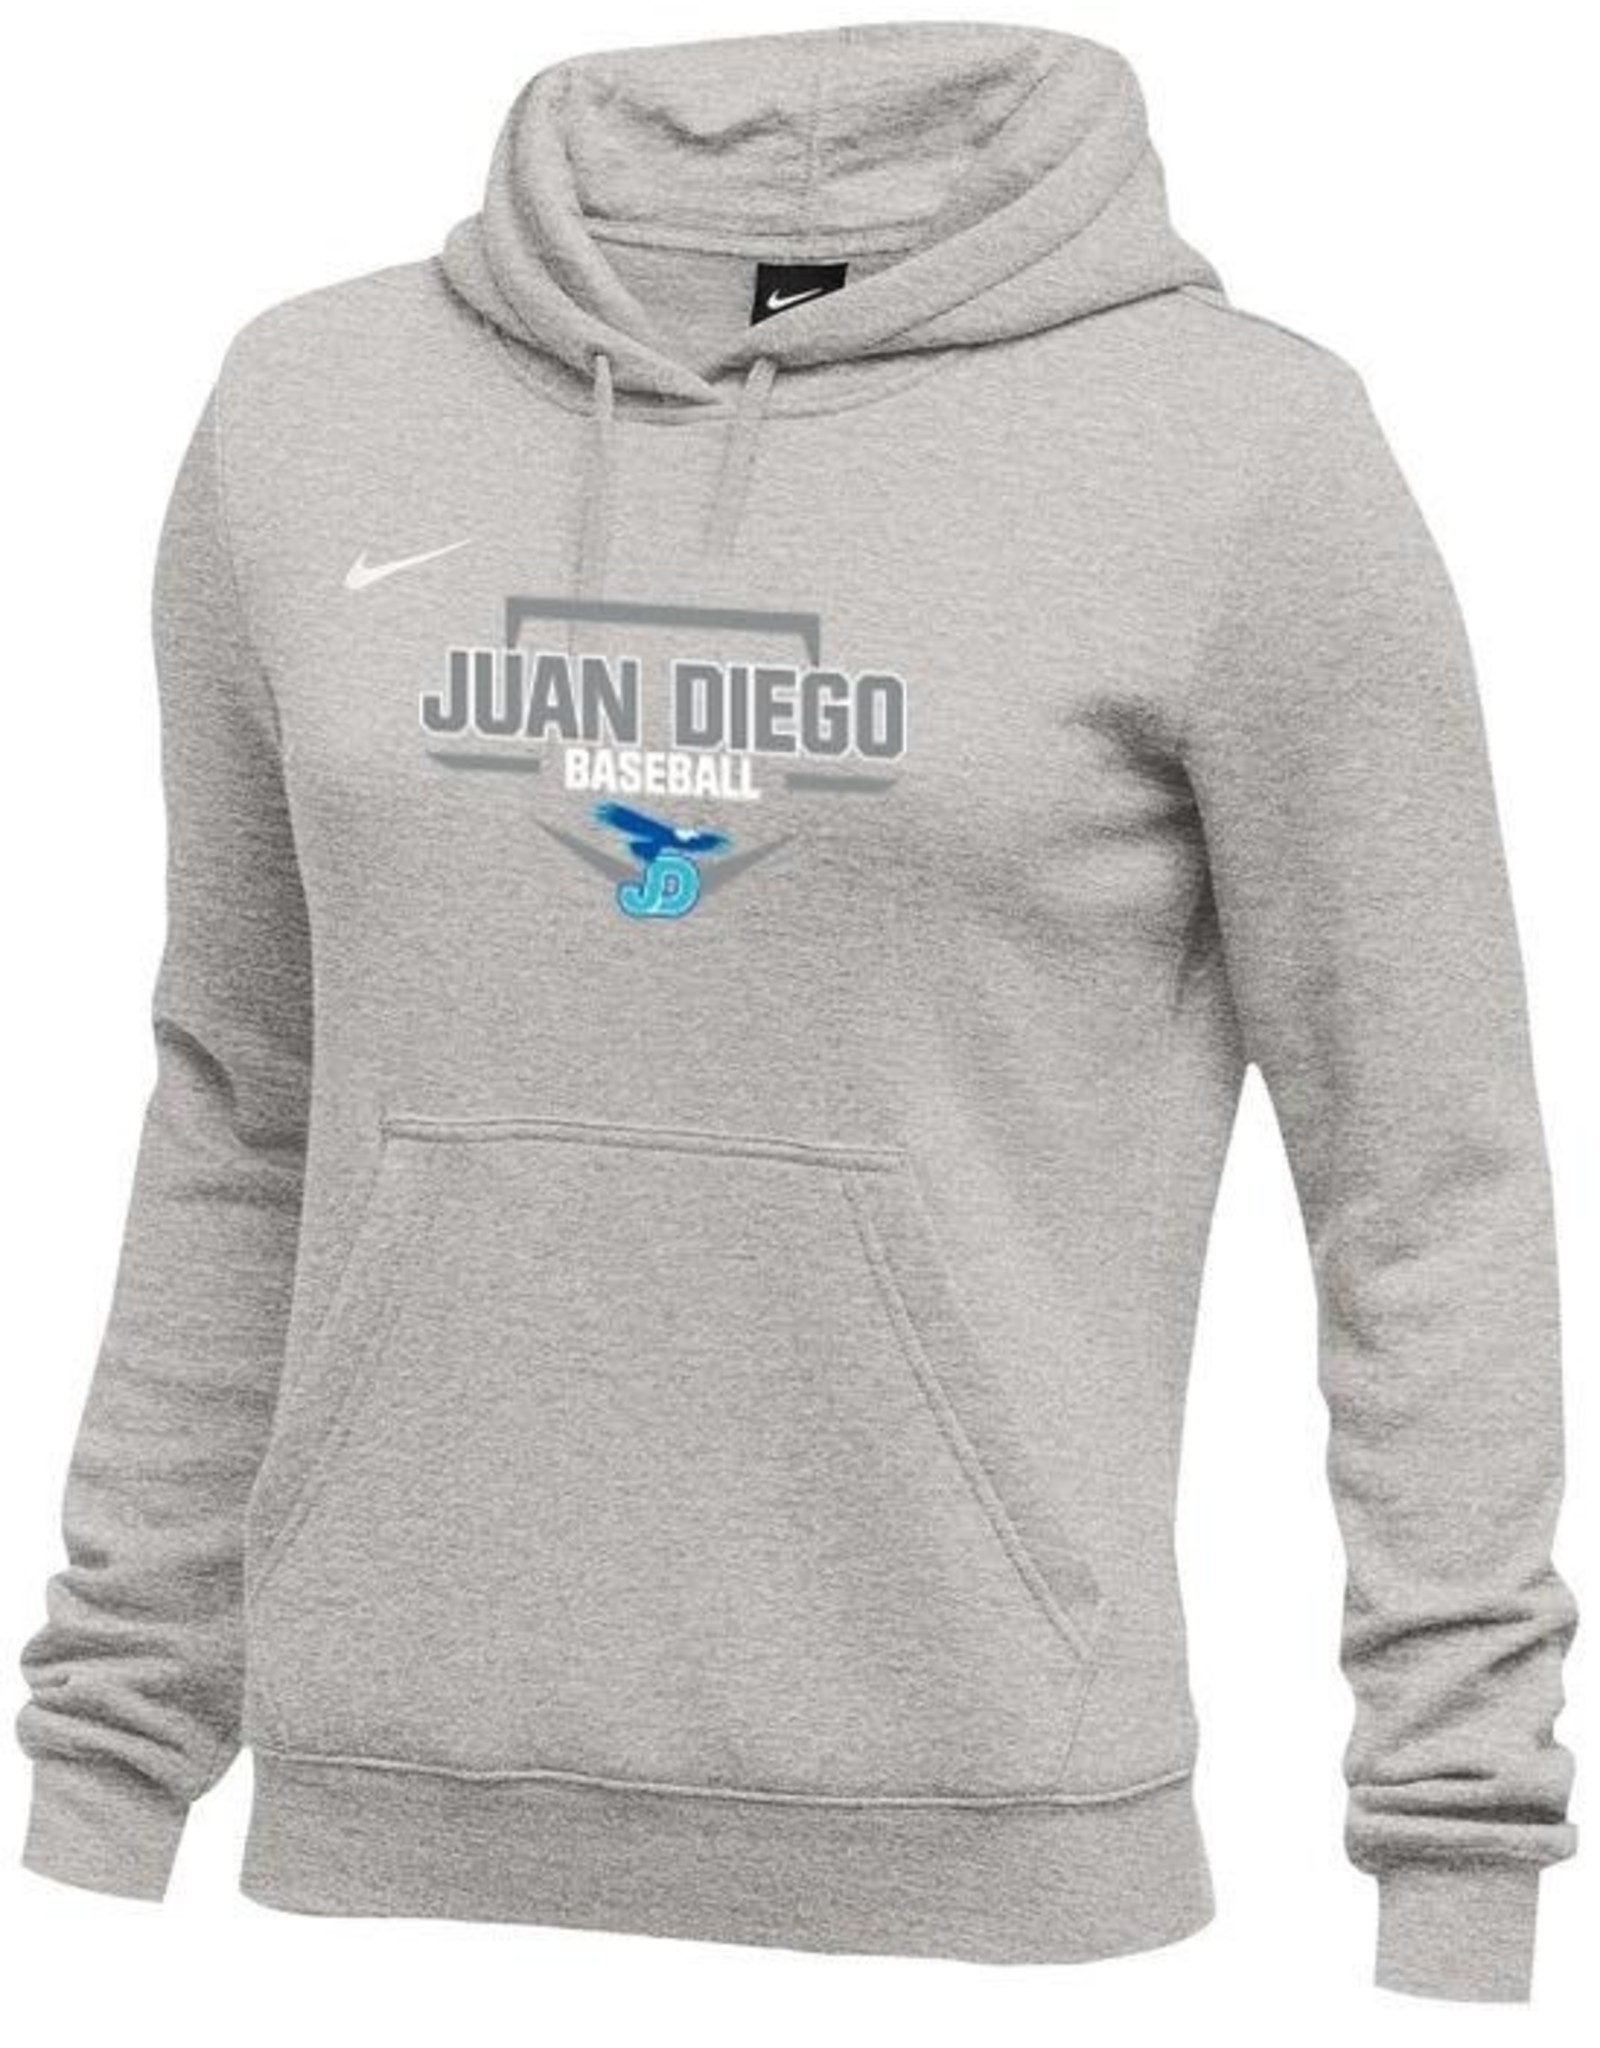 NON-UNIFORM Nike Baseball Hooded Sweatshirt, Womens